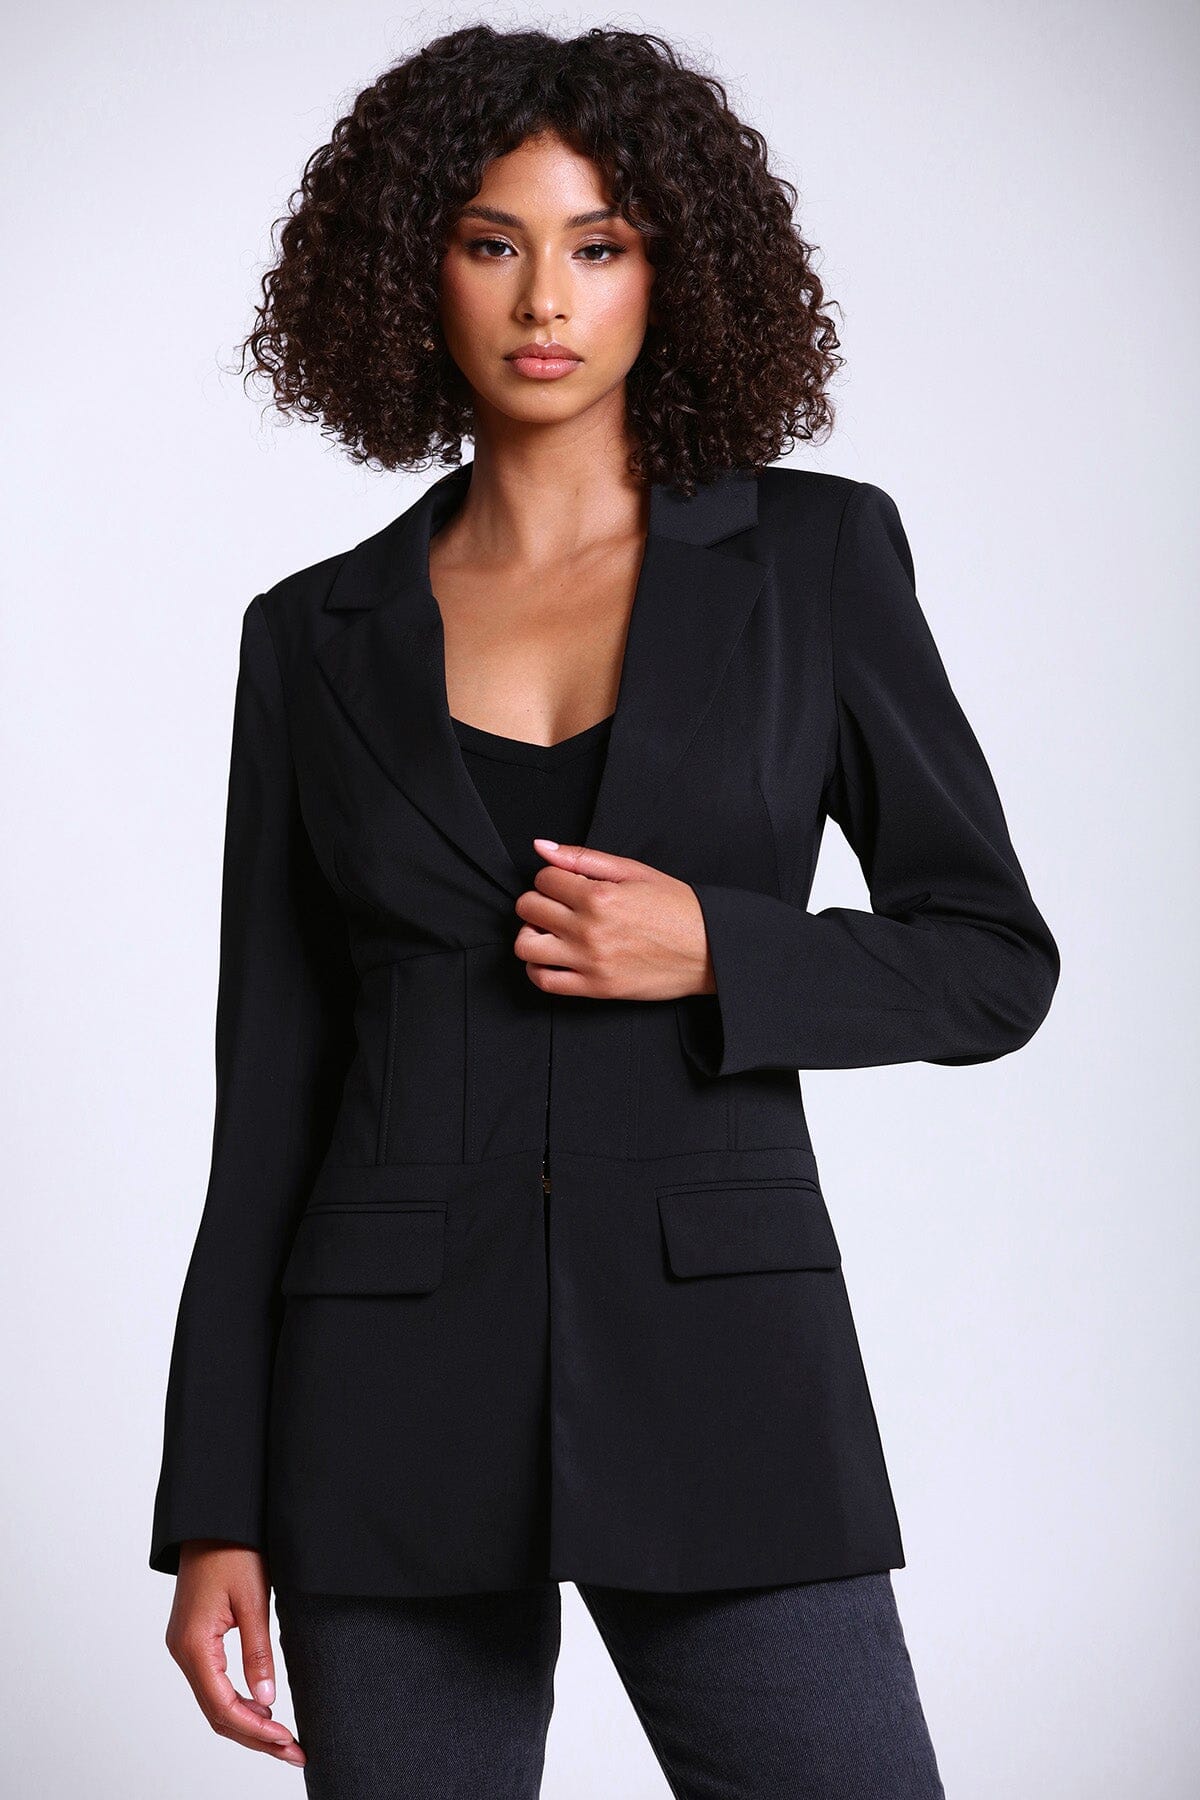 black tailored corset fitted cinched blazer jacket - women's figure flattering date night blazers jackets coats